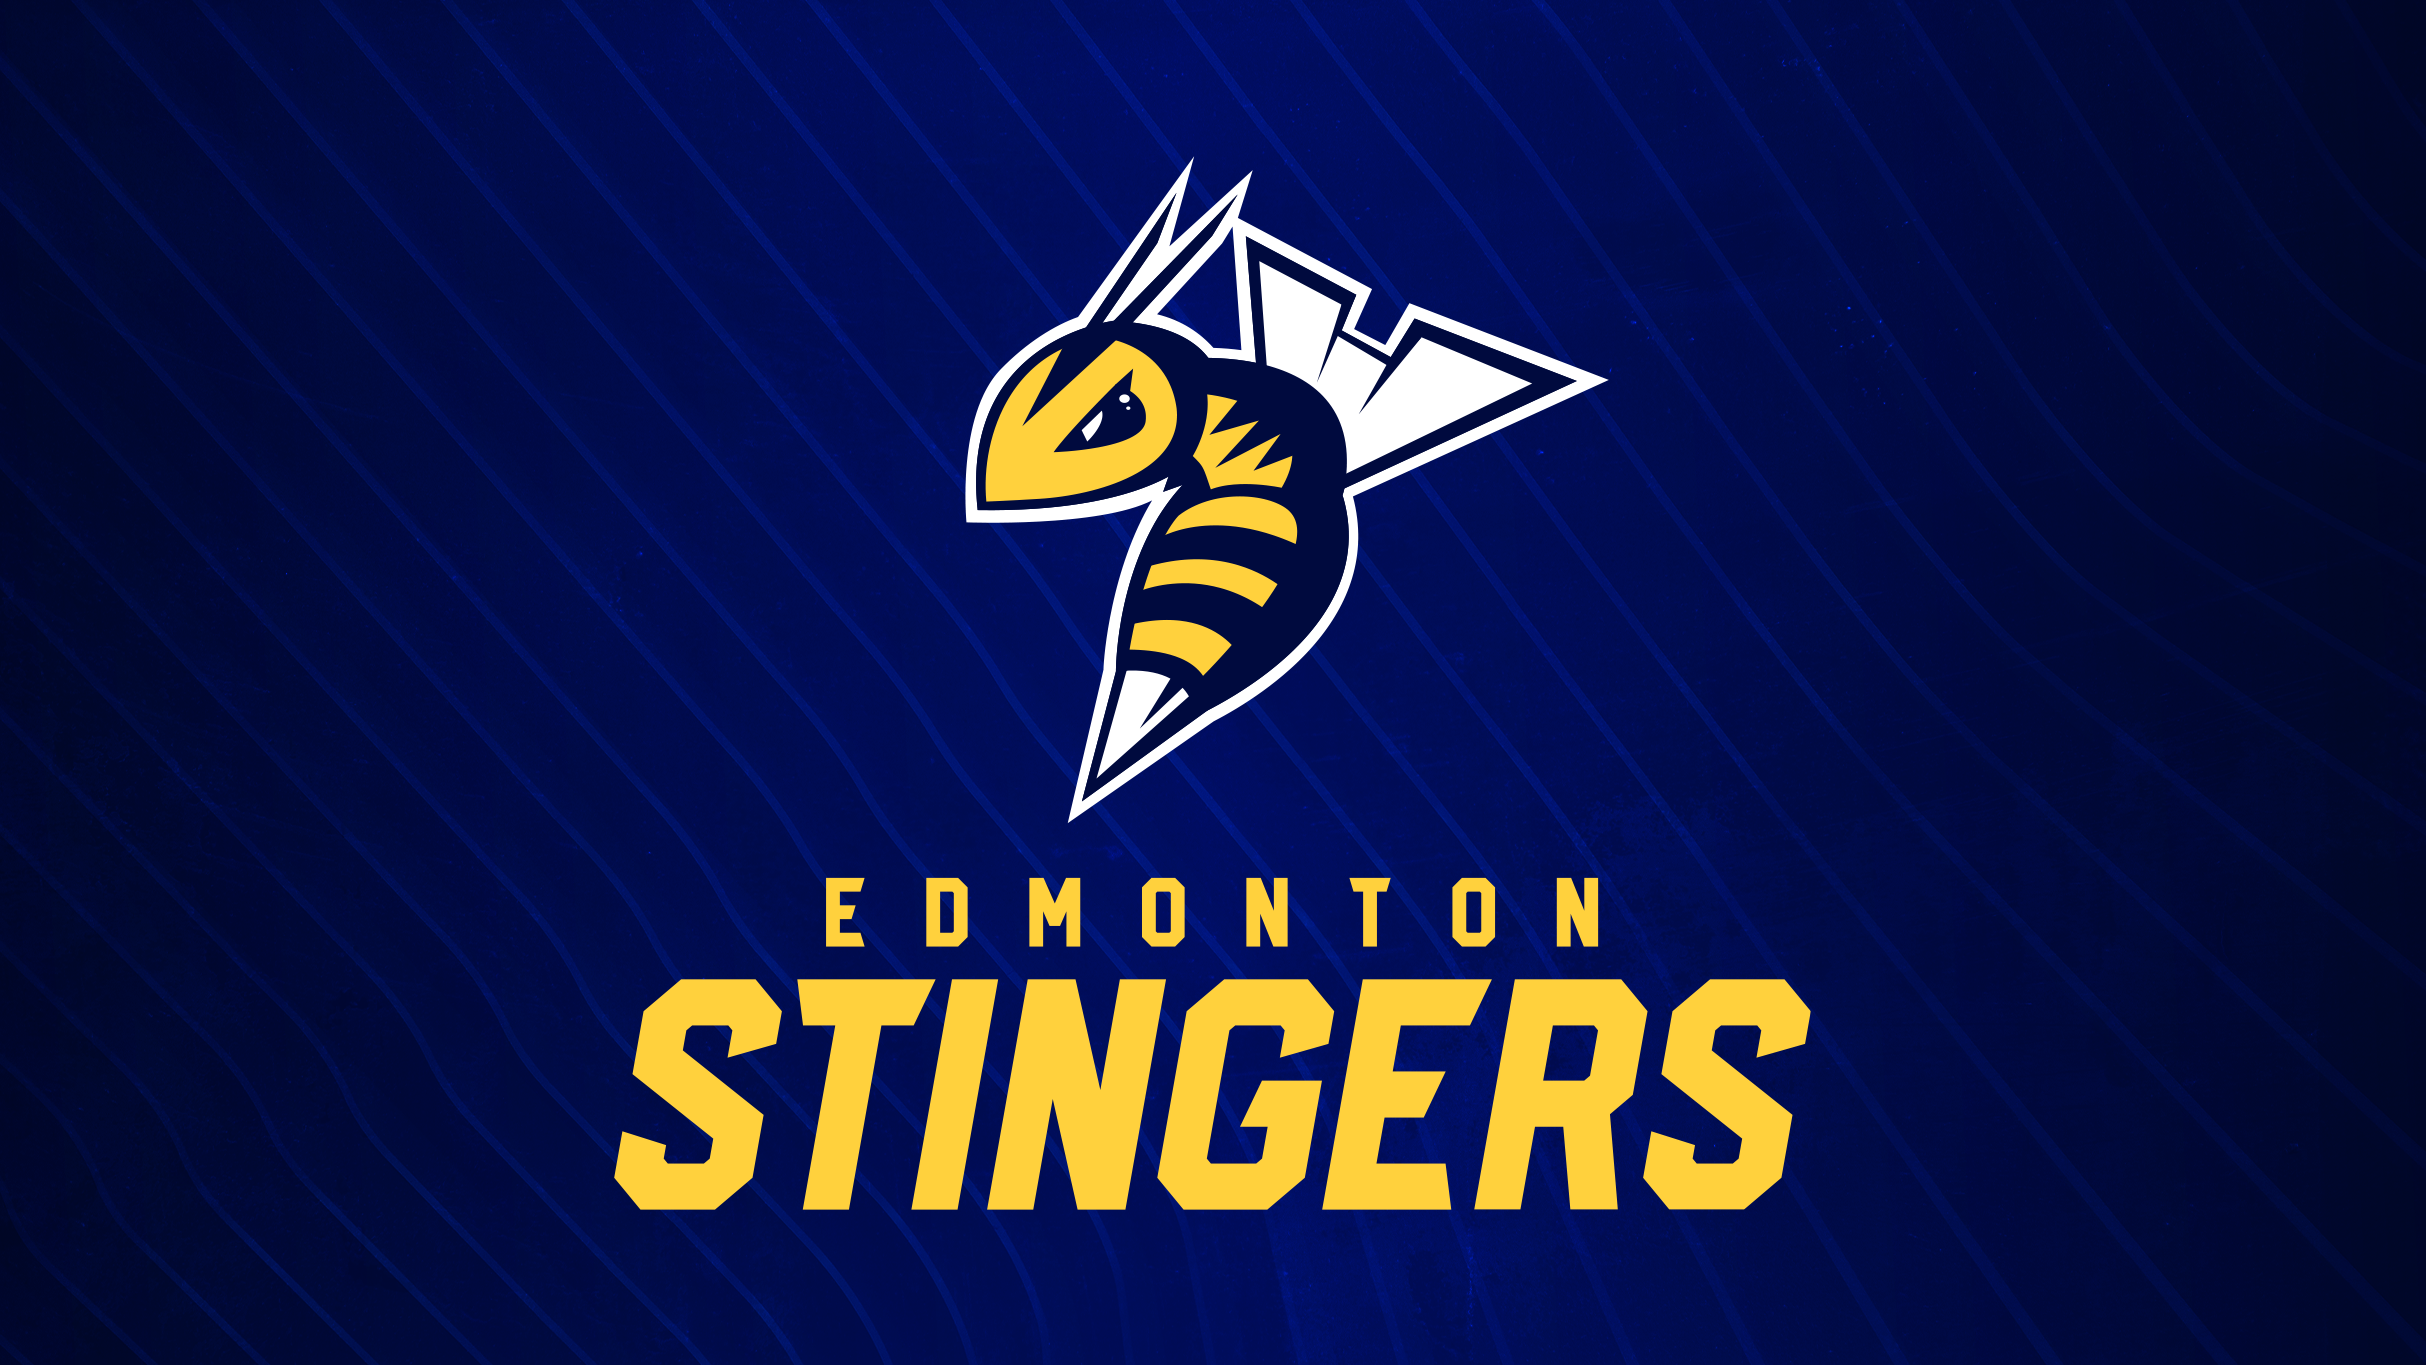 Edmonton Stingers vs. Calgary Surge in Edmonton promo photo for Exclusive presale offer code